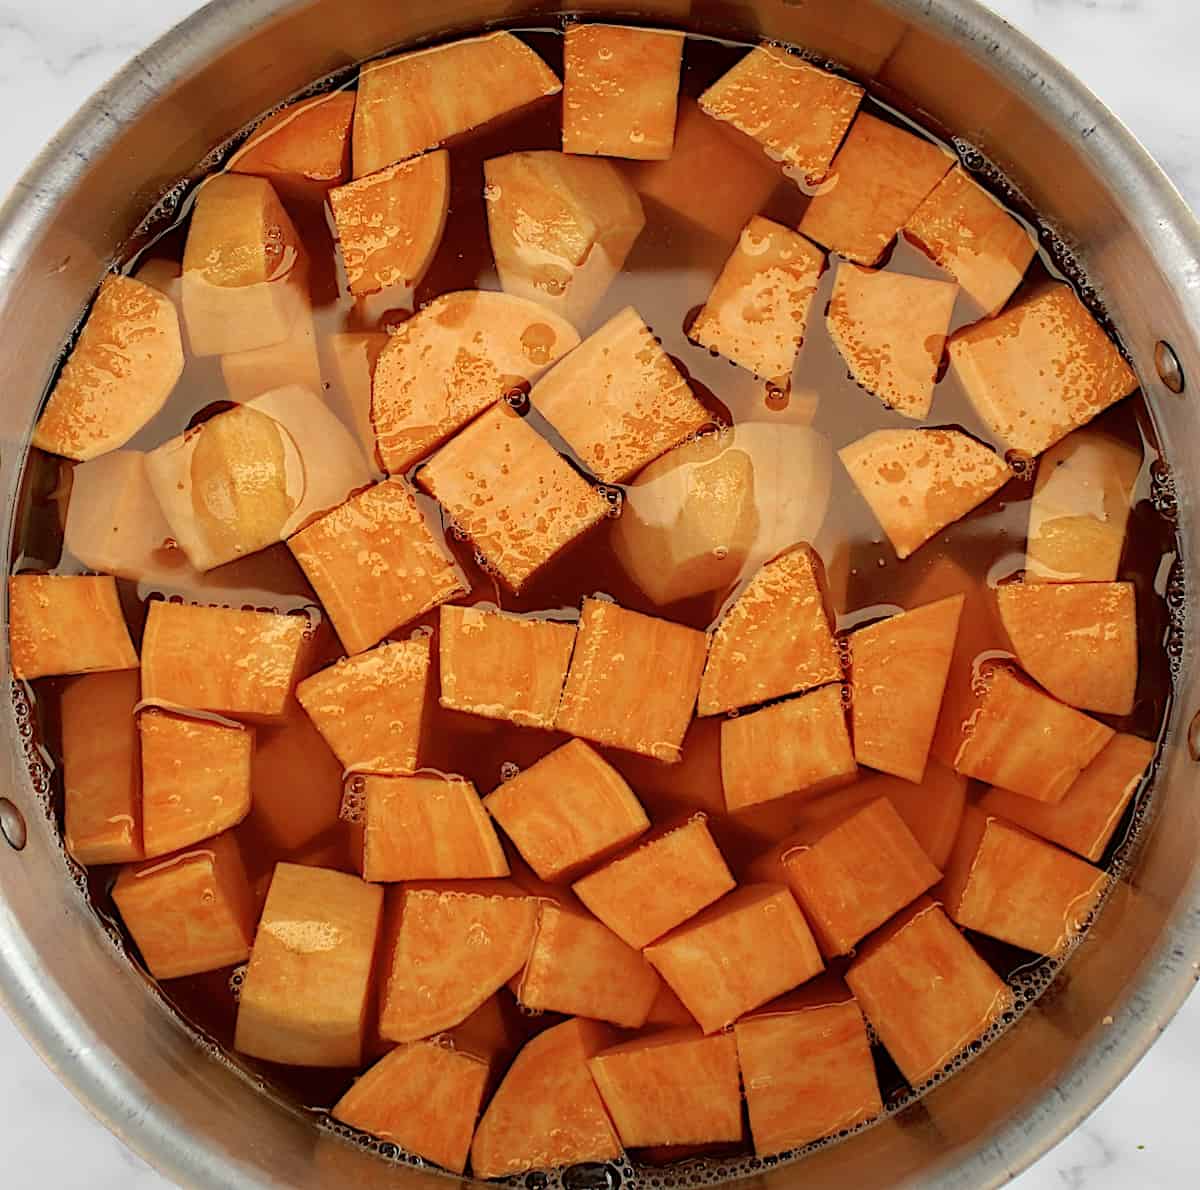 chopped sweet potatoes in pot of water